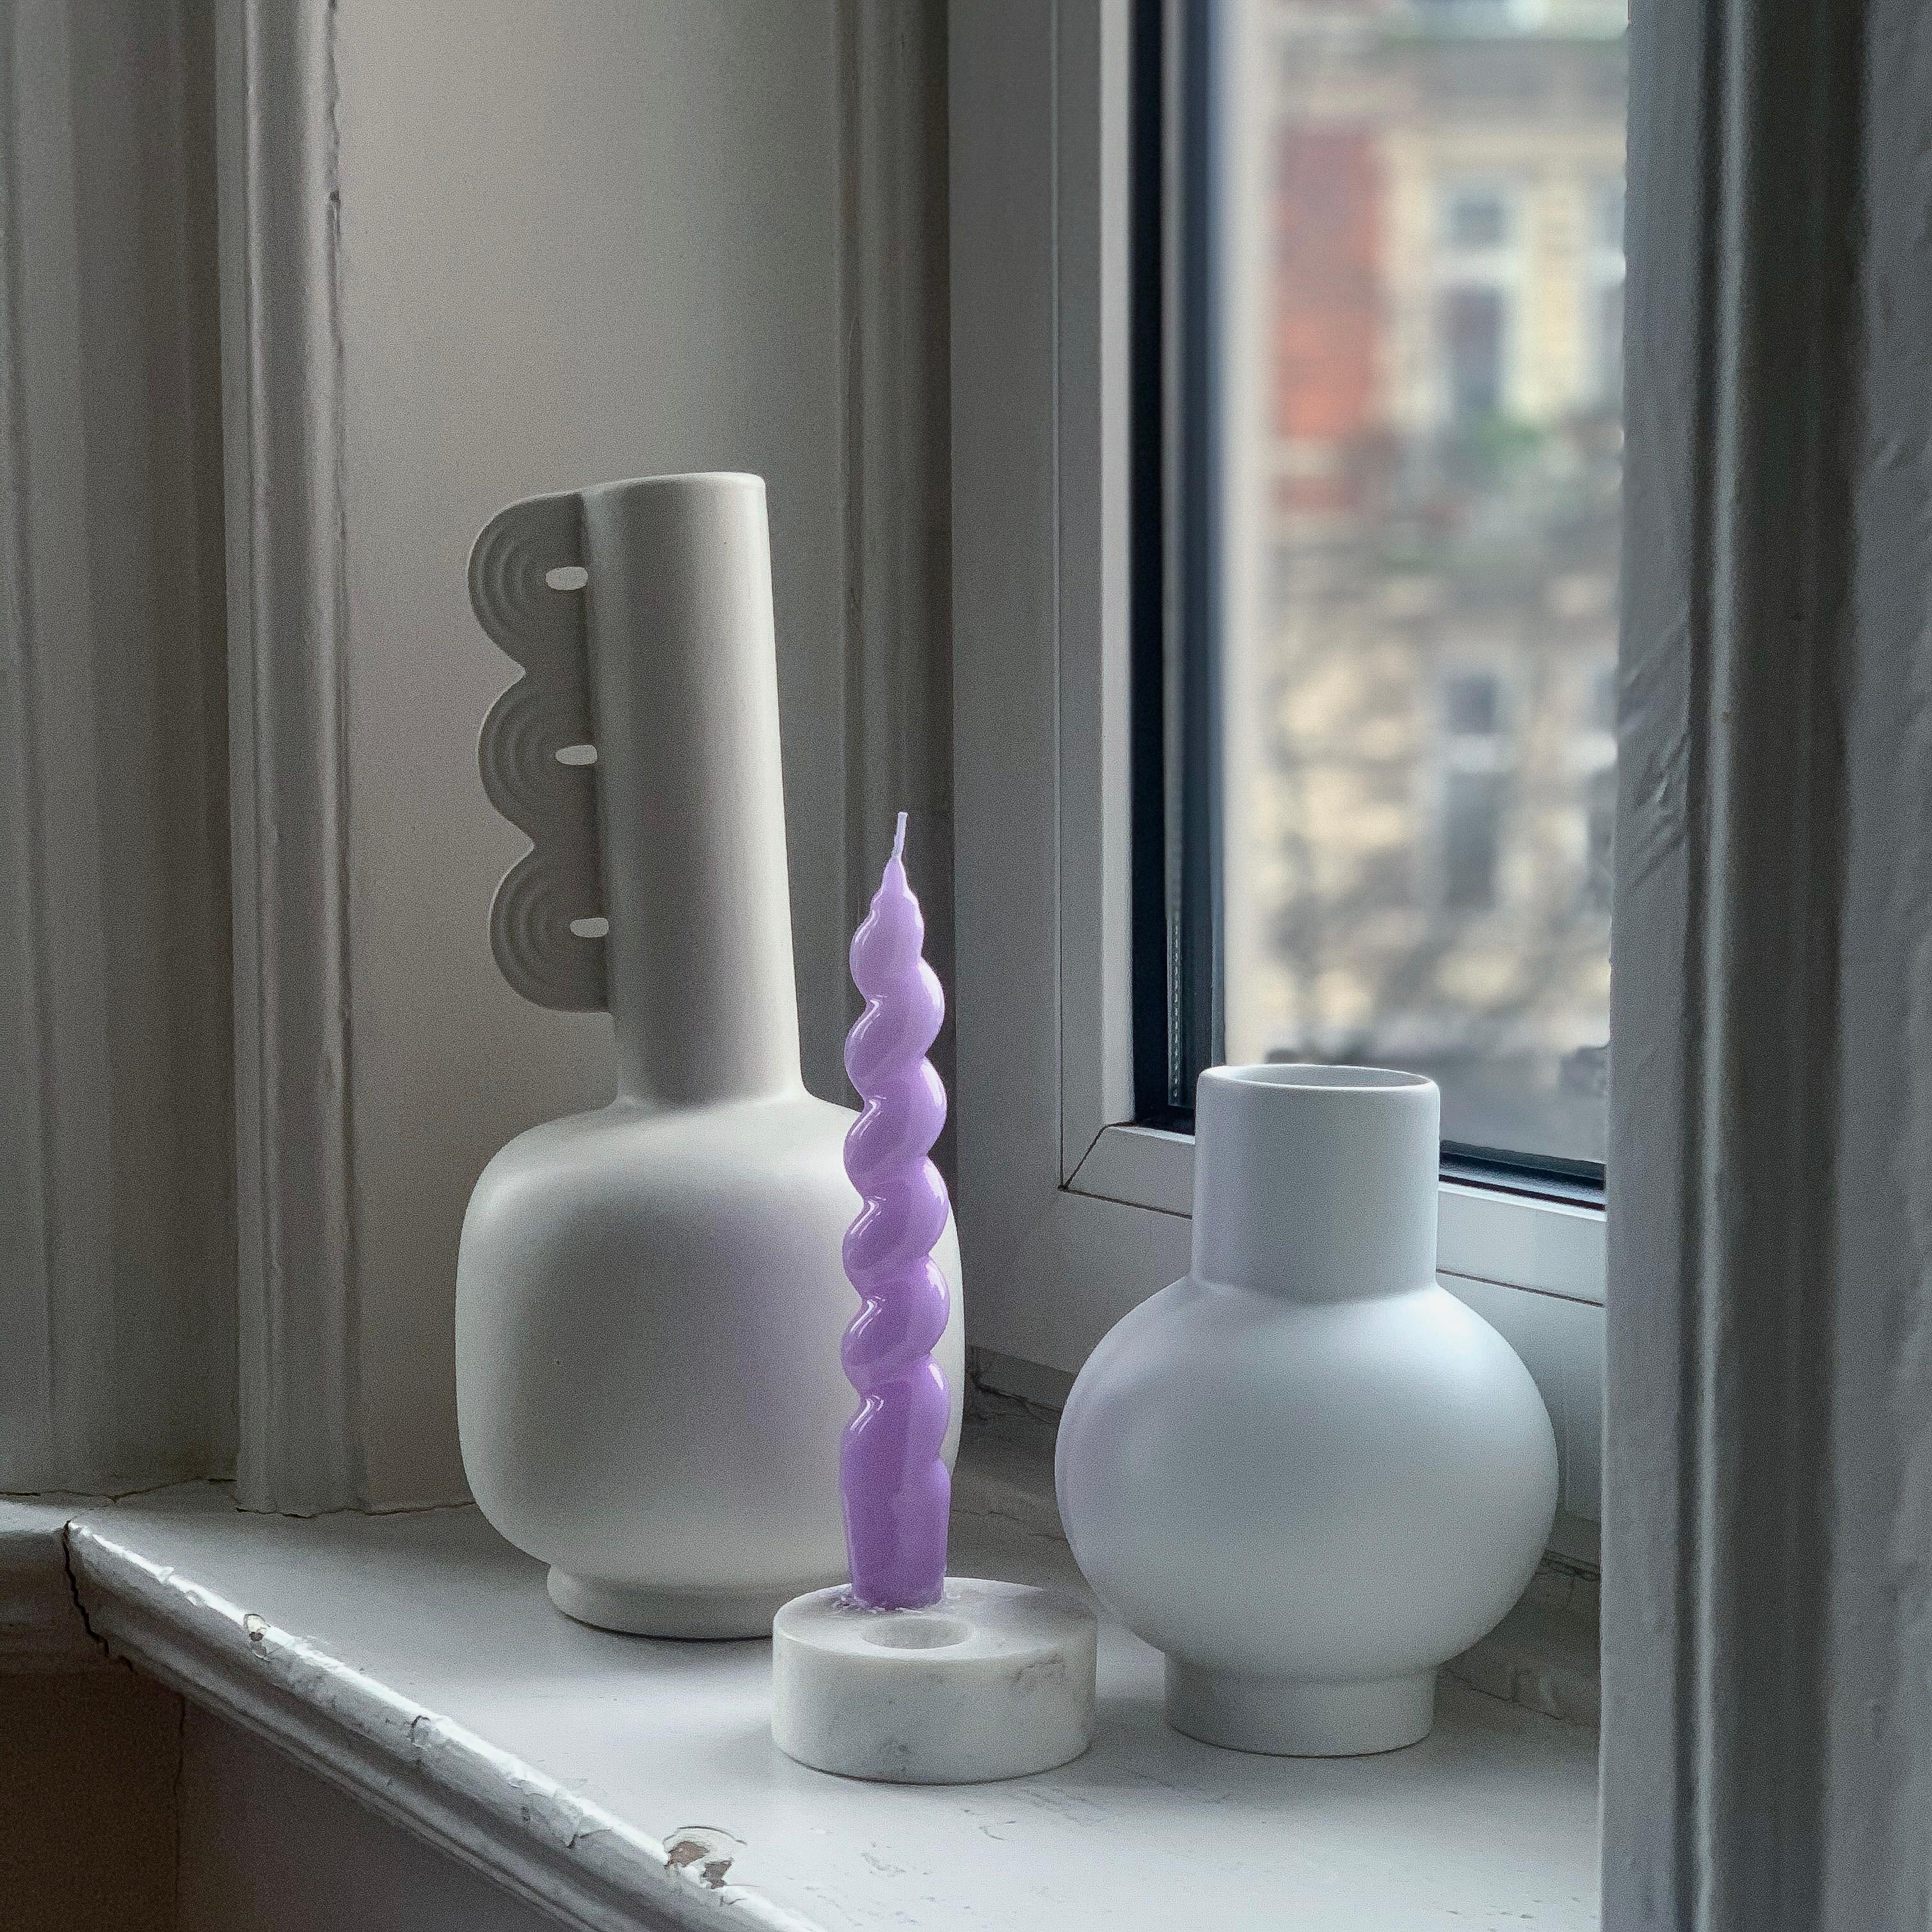 F O R M S
___________
#forms #vasenmittwoch #lilac #white #vases #vasen #candle #kerzen 